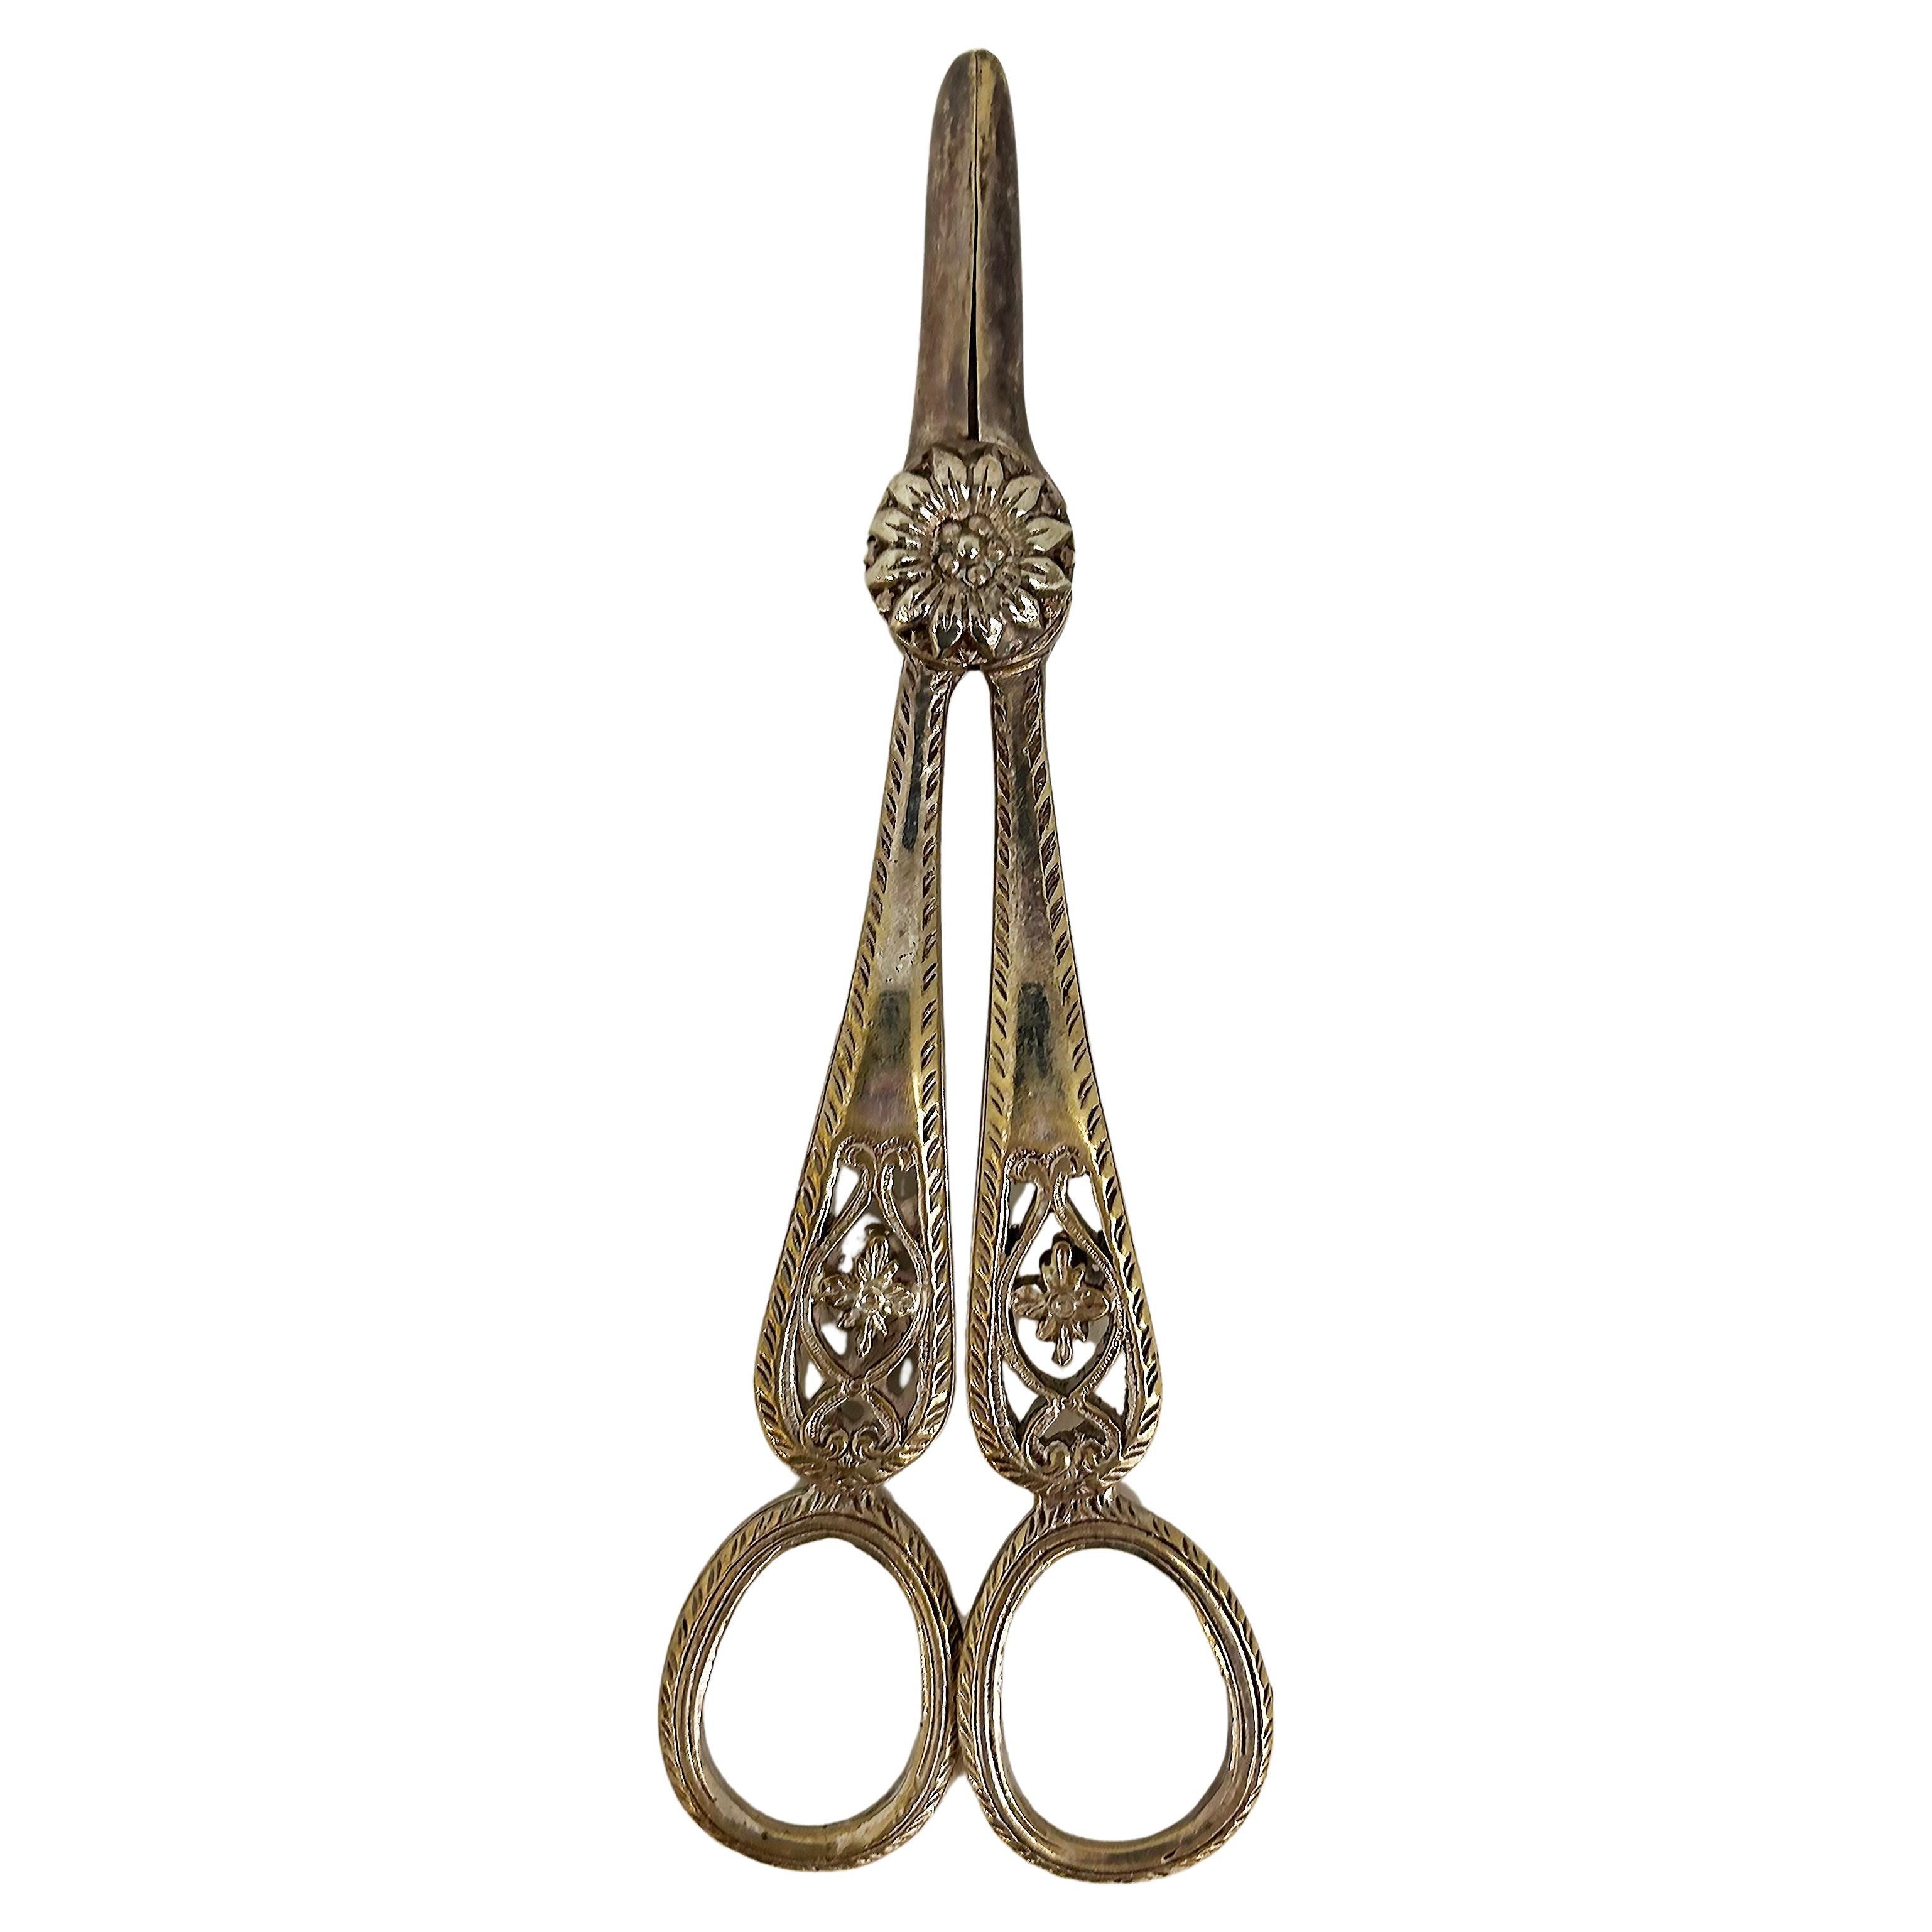 Antique Silver Plate Grape Scissors, Floral and Filigree Details